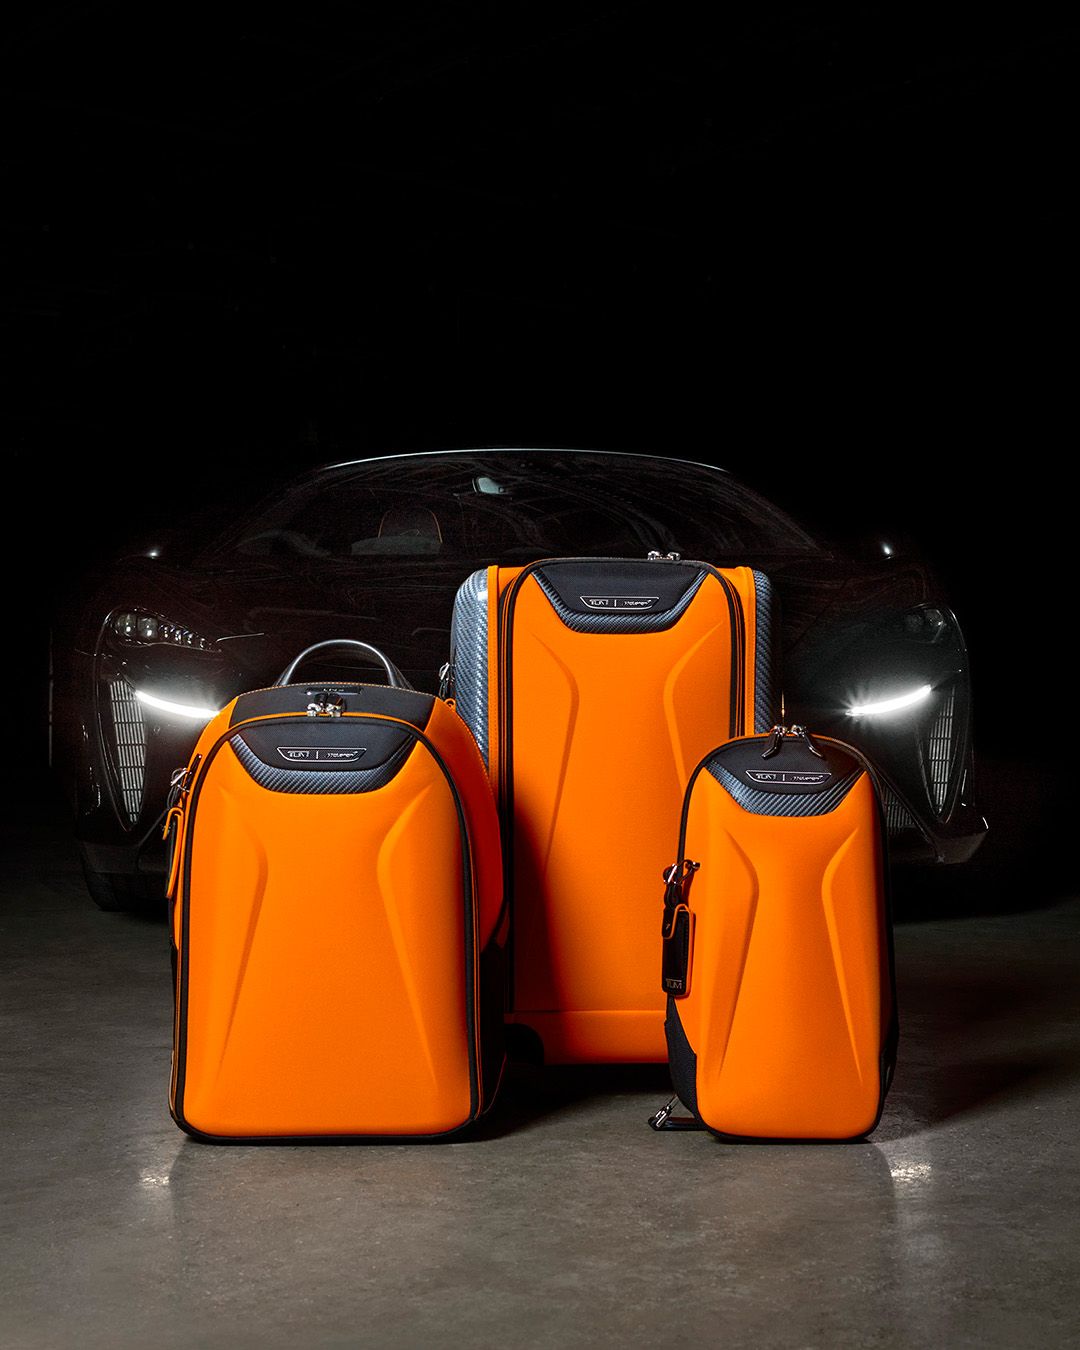 mclaren tumi travel fashion lifestyle bags luggage luxury luxurious limited edition